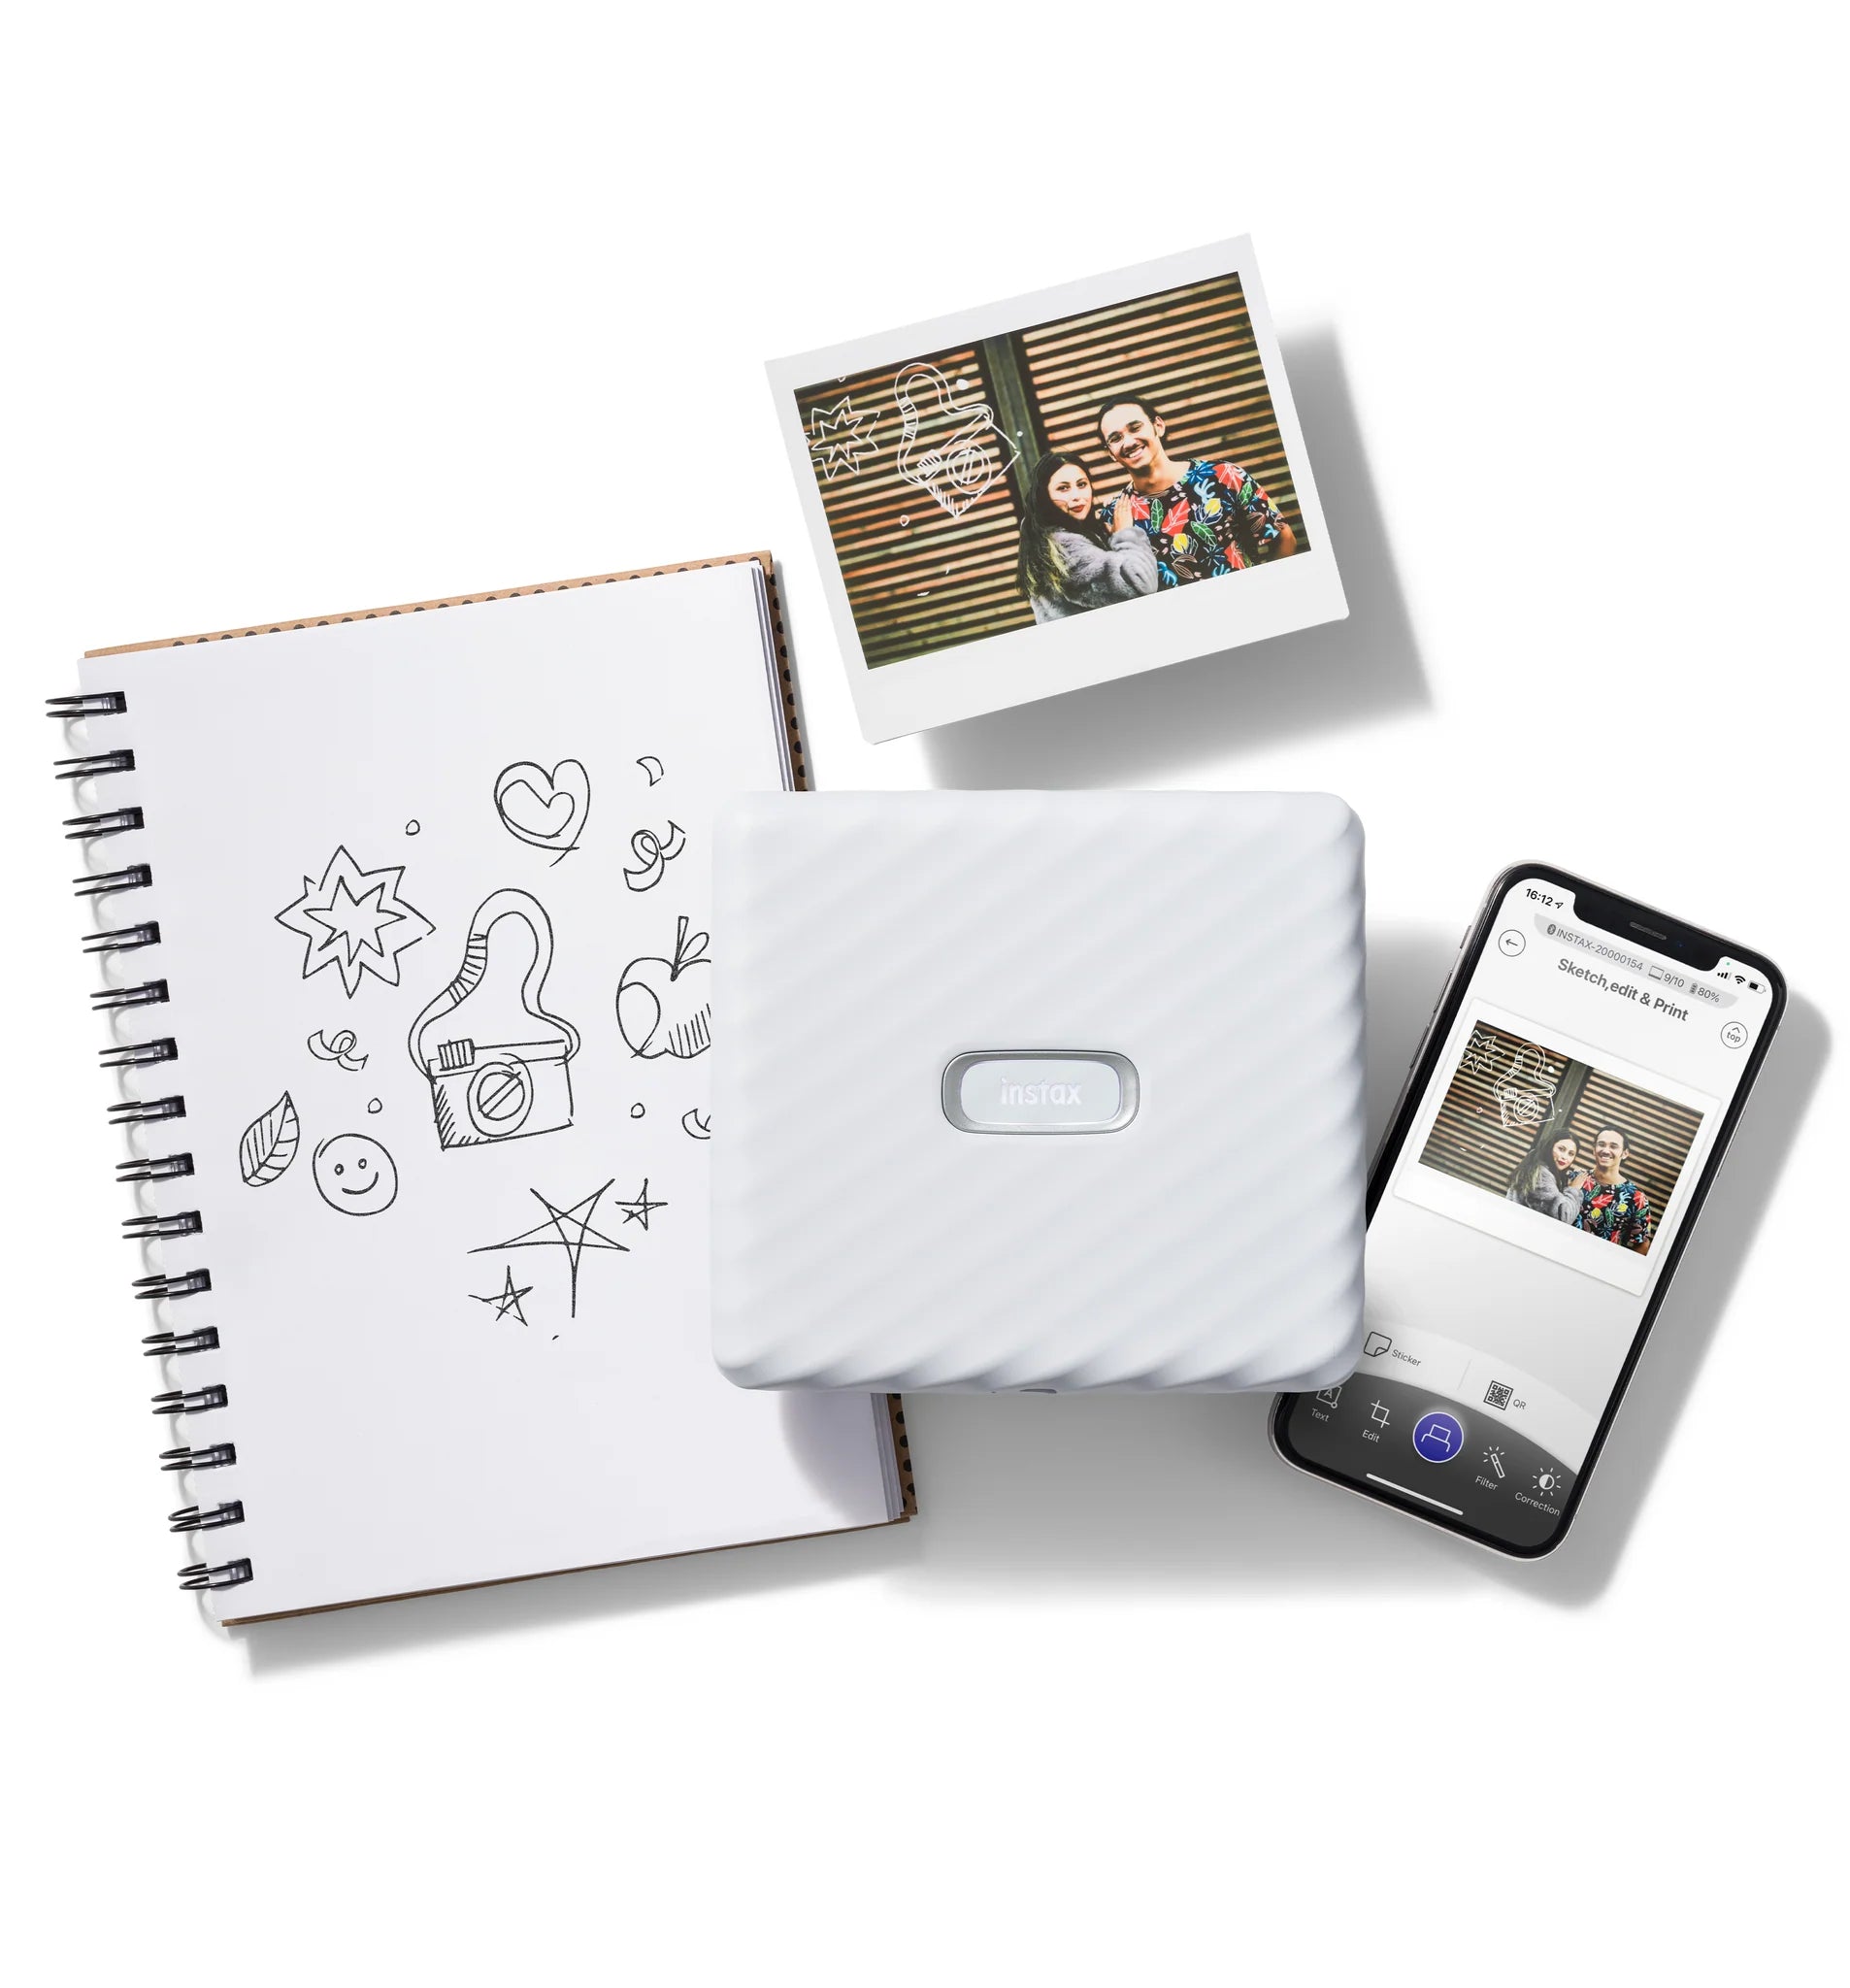 Instax Link Wide Smartphone Printer (White) + Film Pack